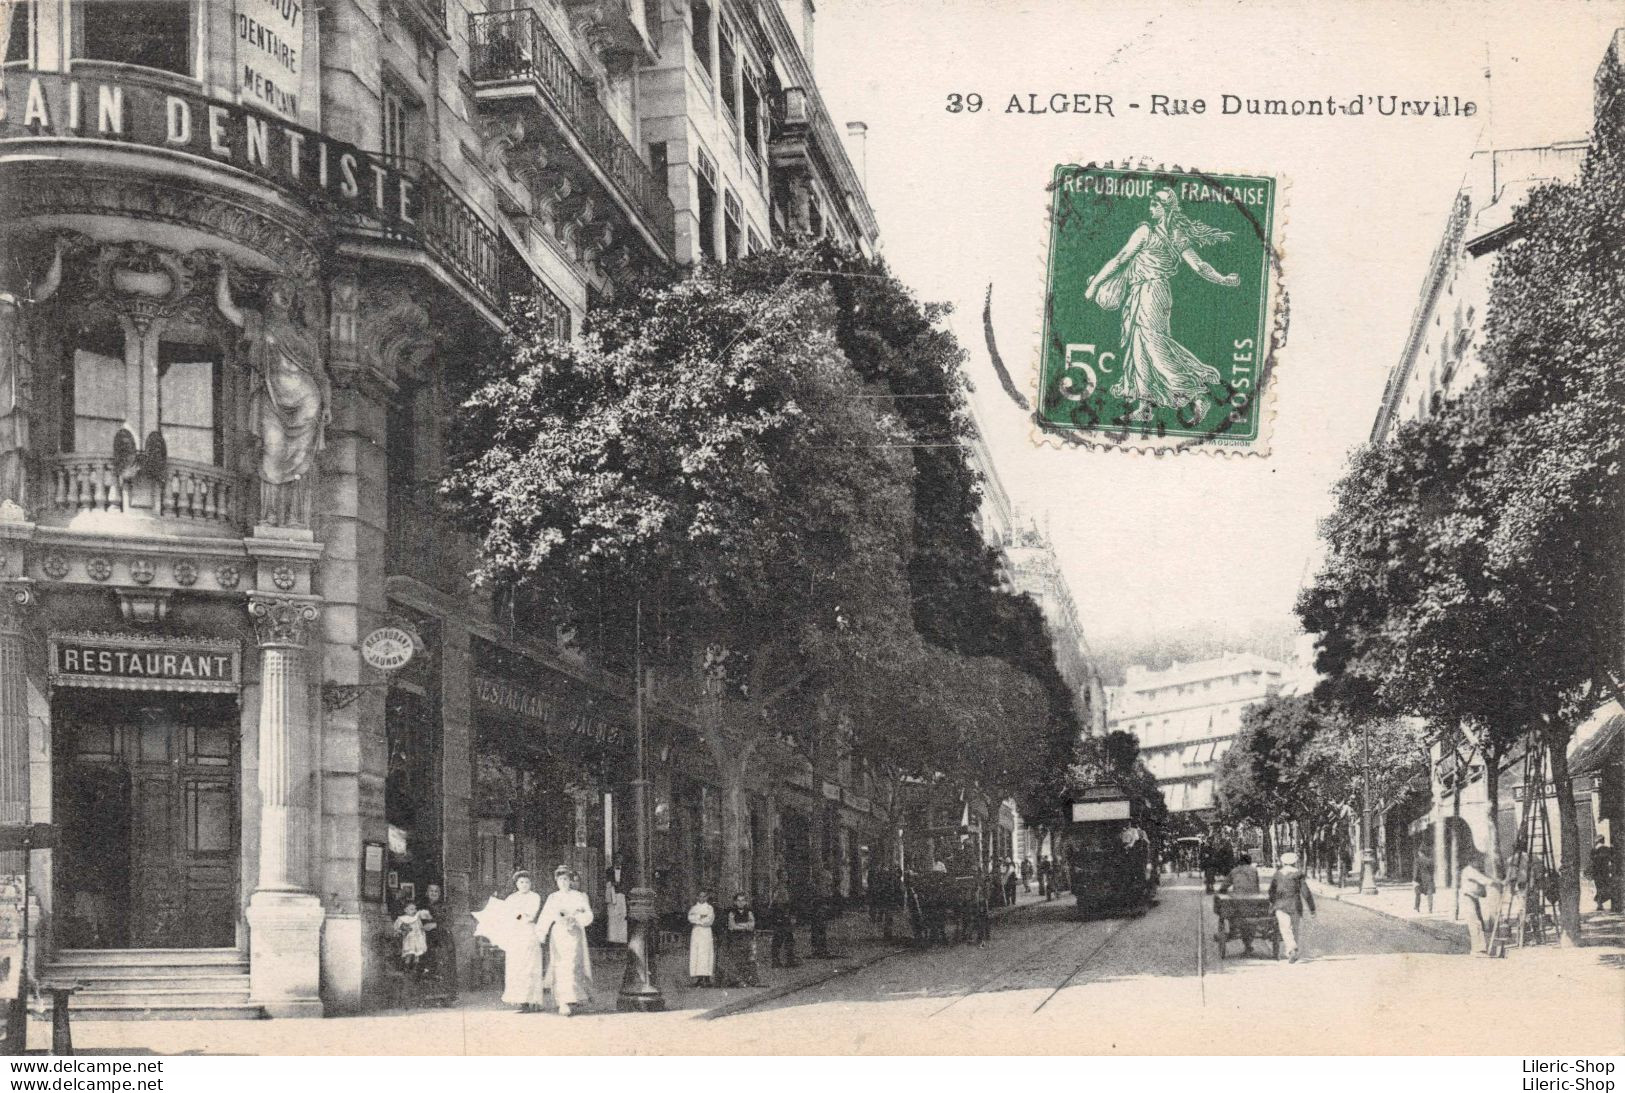 ALGER - Rue Durmont-d-'Urville - Restaurant Jaunon - Tramway Cpa  14 05 1914   ♥♥♥ - Algiers